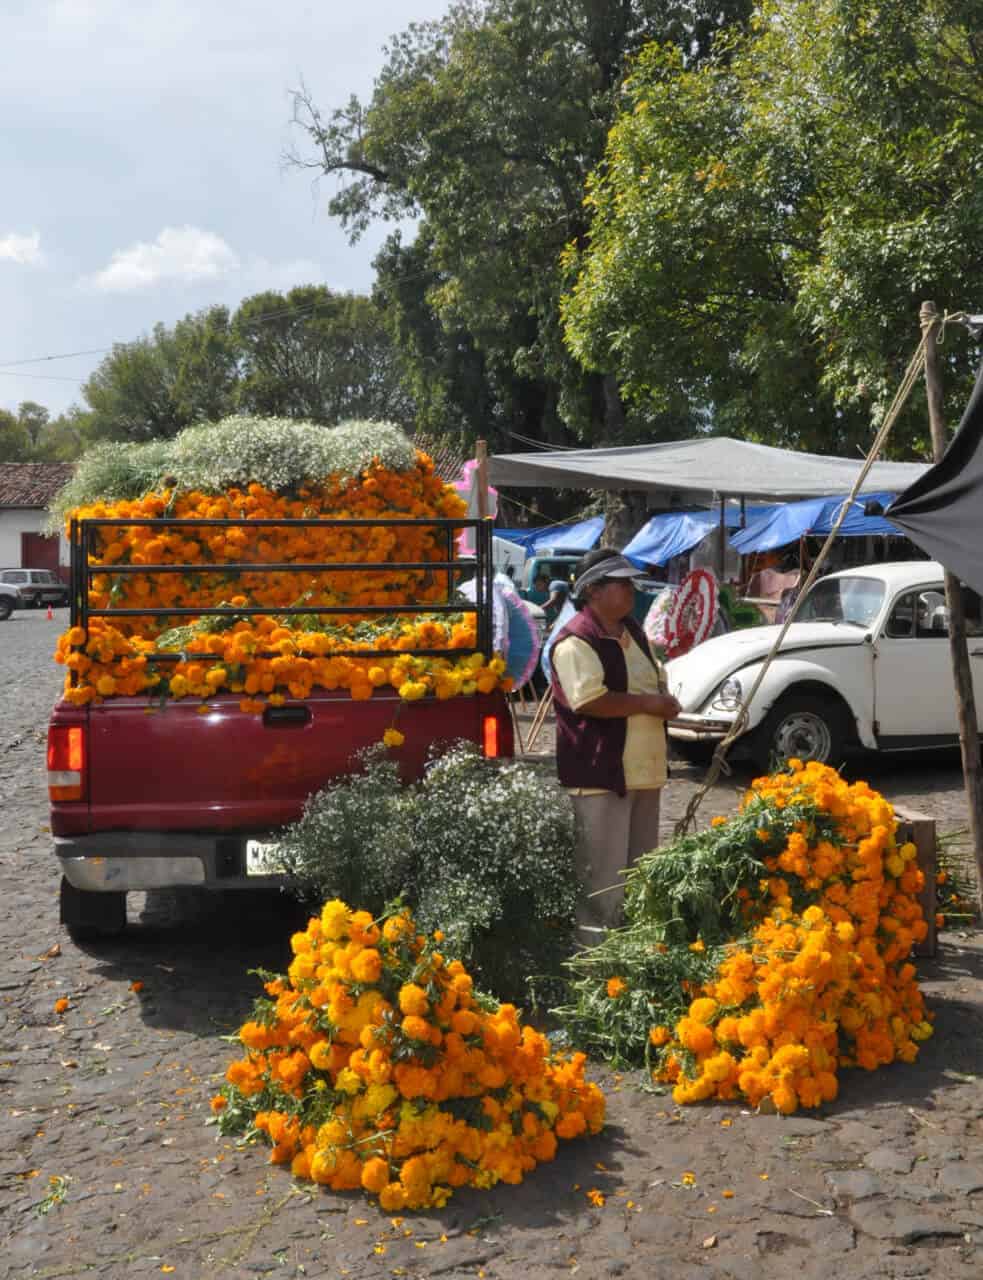 Cempasuchil vendor in Patzcuaro, Mexico. 